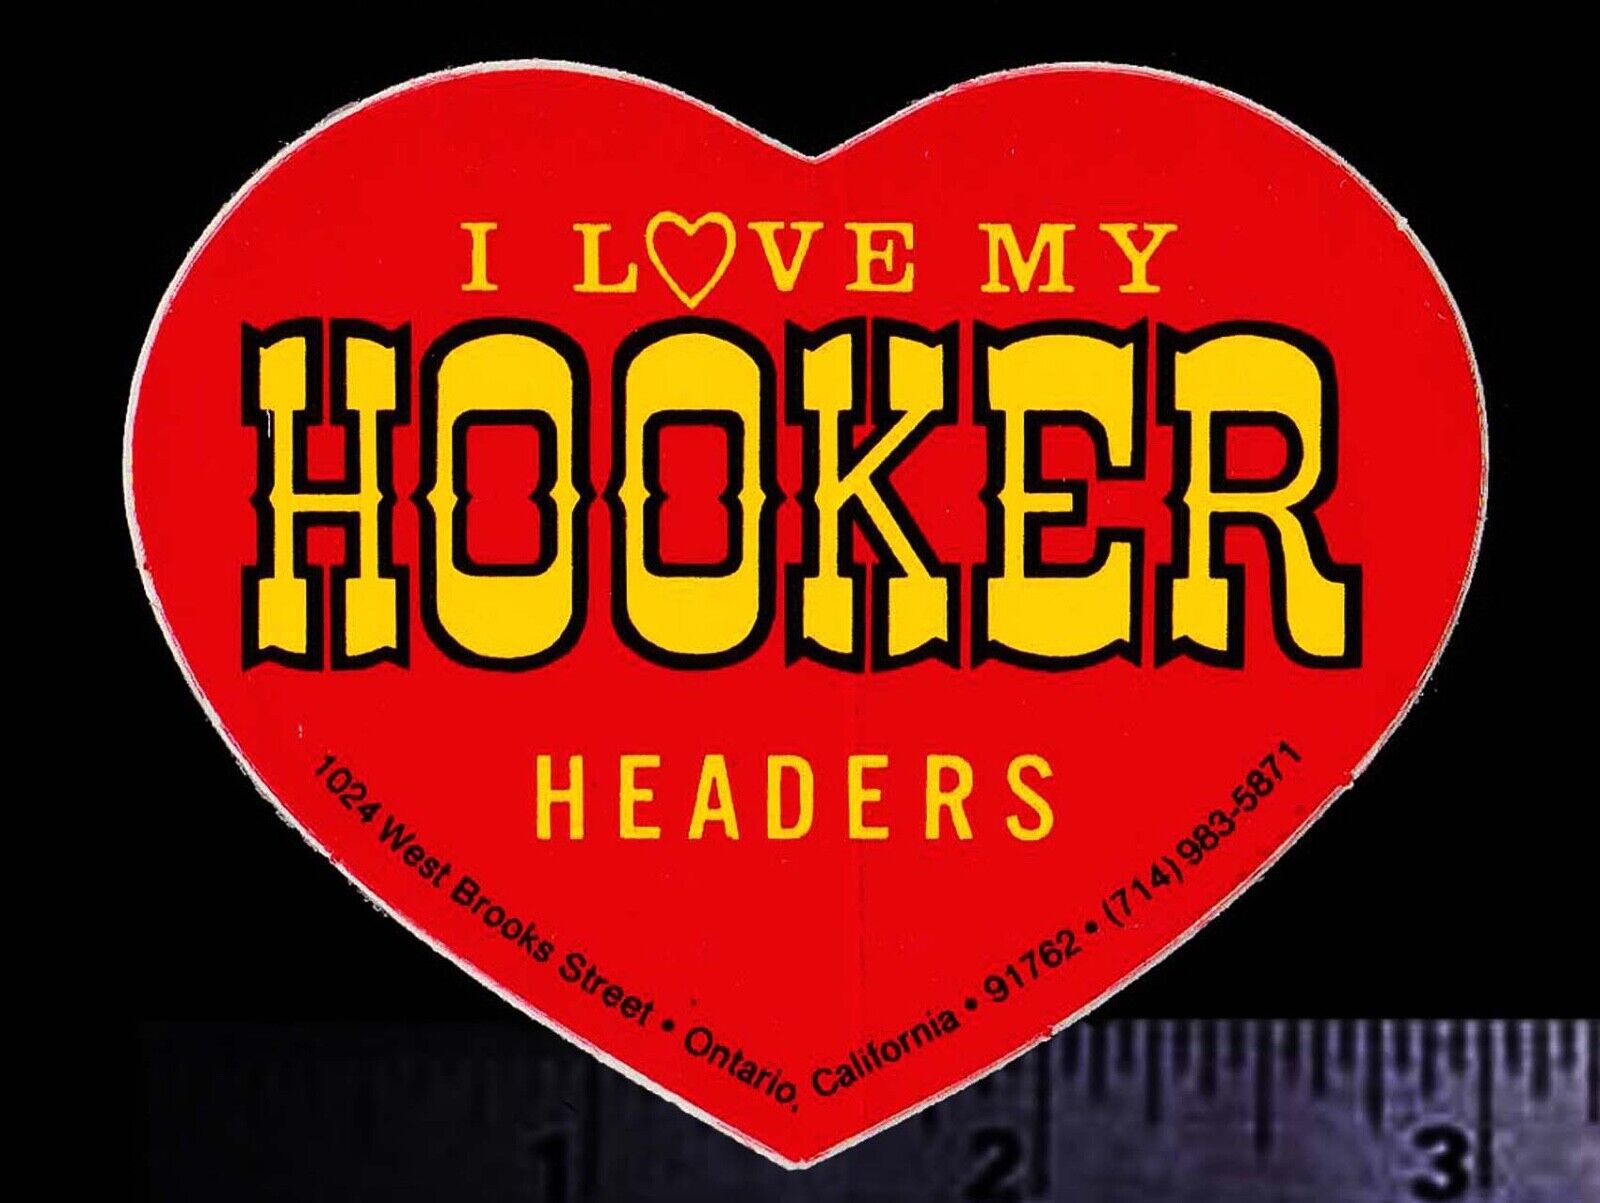 HOOKER HEADERS - Original Vintage 1970\'s 80’s Racing Decal/Sticker 